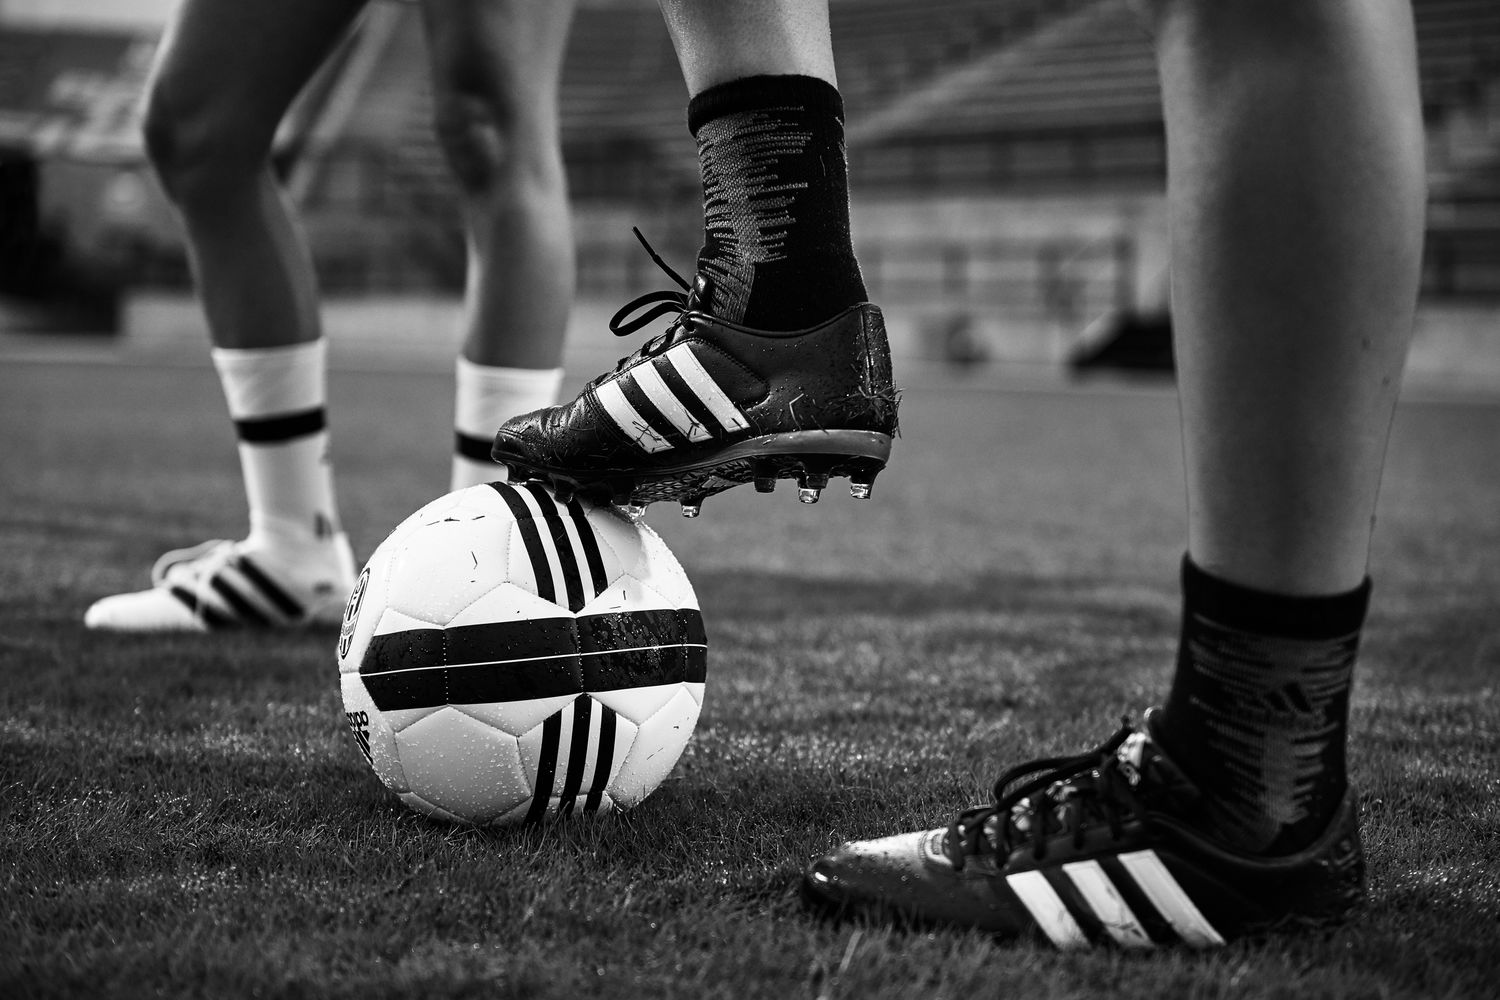 kathrin-hohberg-adidas-soccer-women-us-2018-cathrine-wessel-01